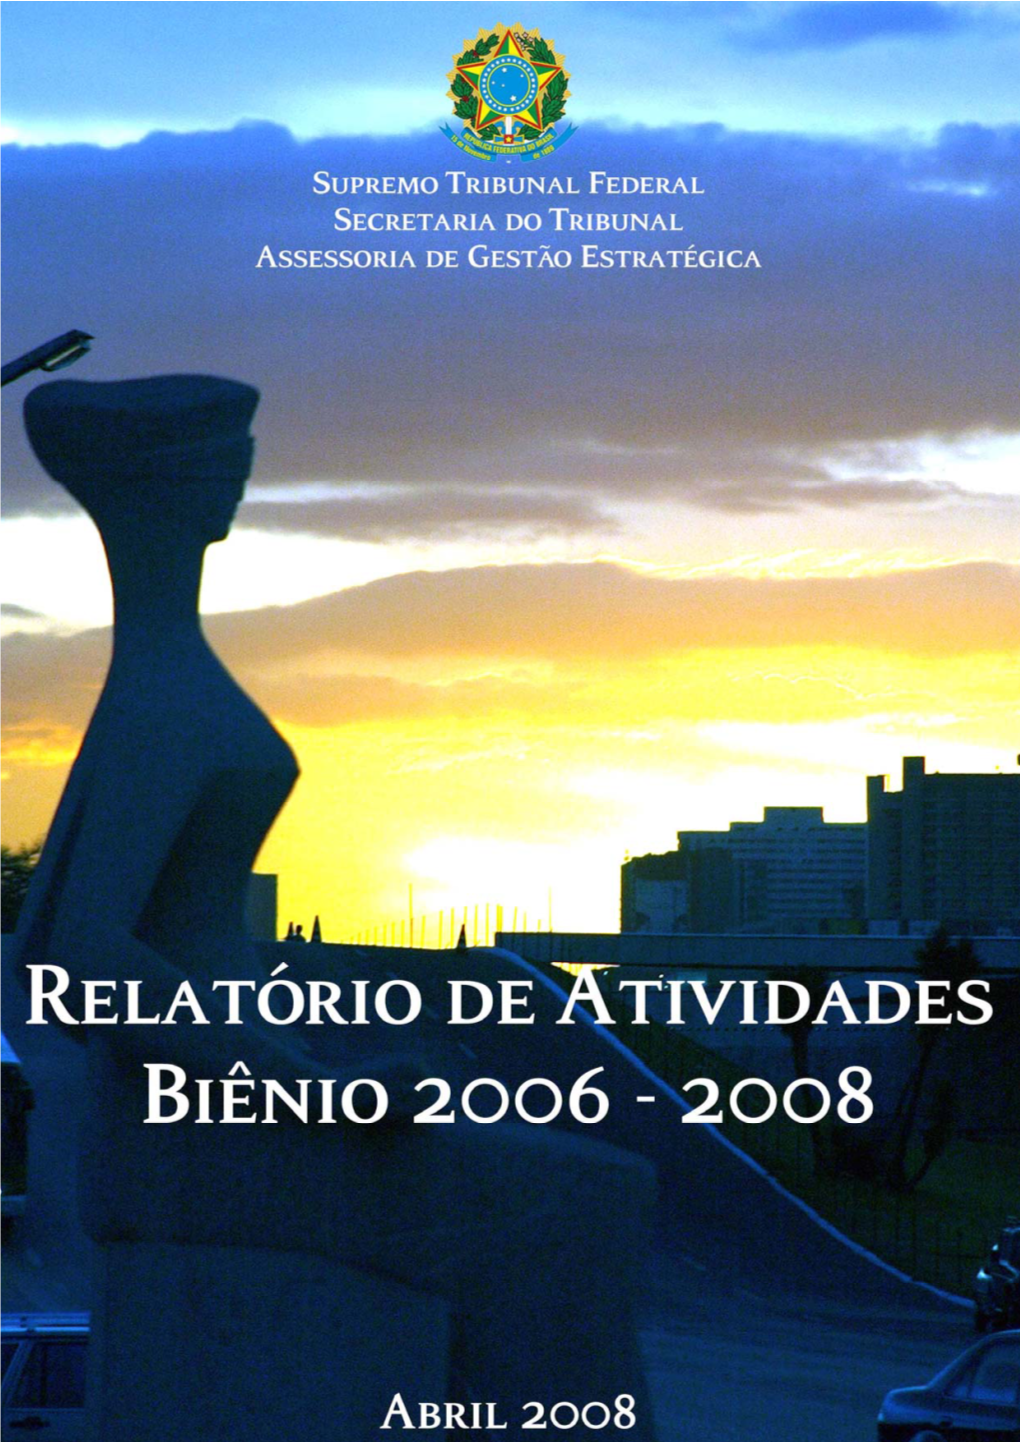 Relatorio 2006-2008.Pdf (2.546Mb)